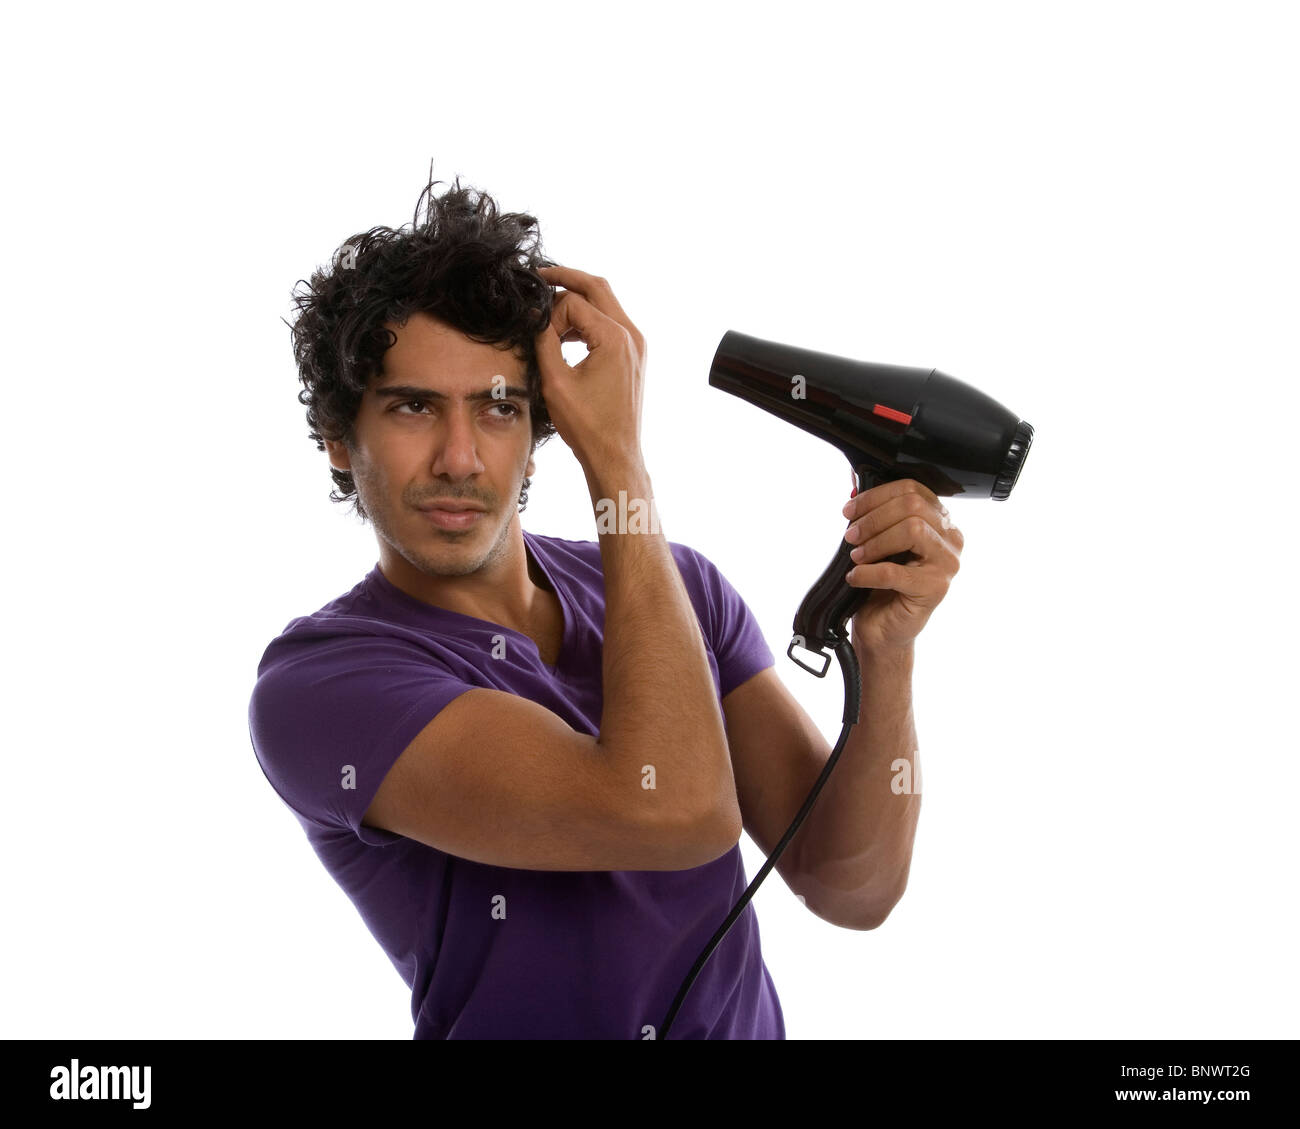 Man blow drying hair - bad hair days! Stock Photo - Alamy